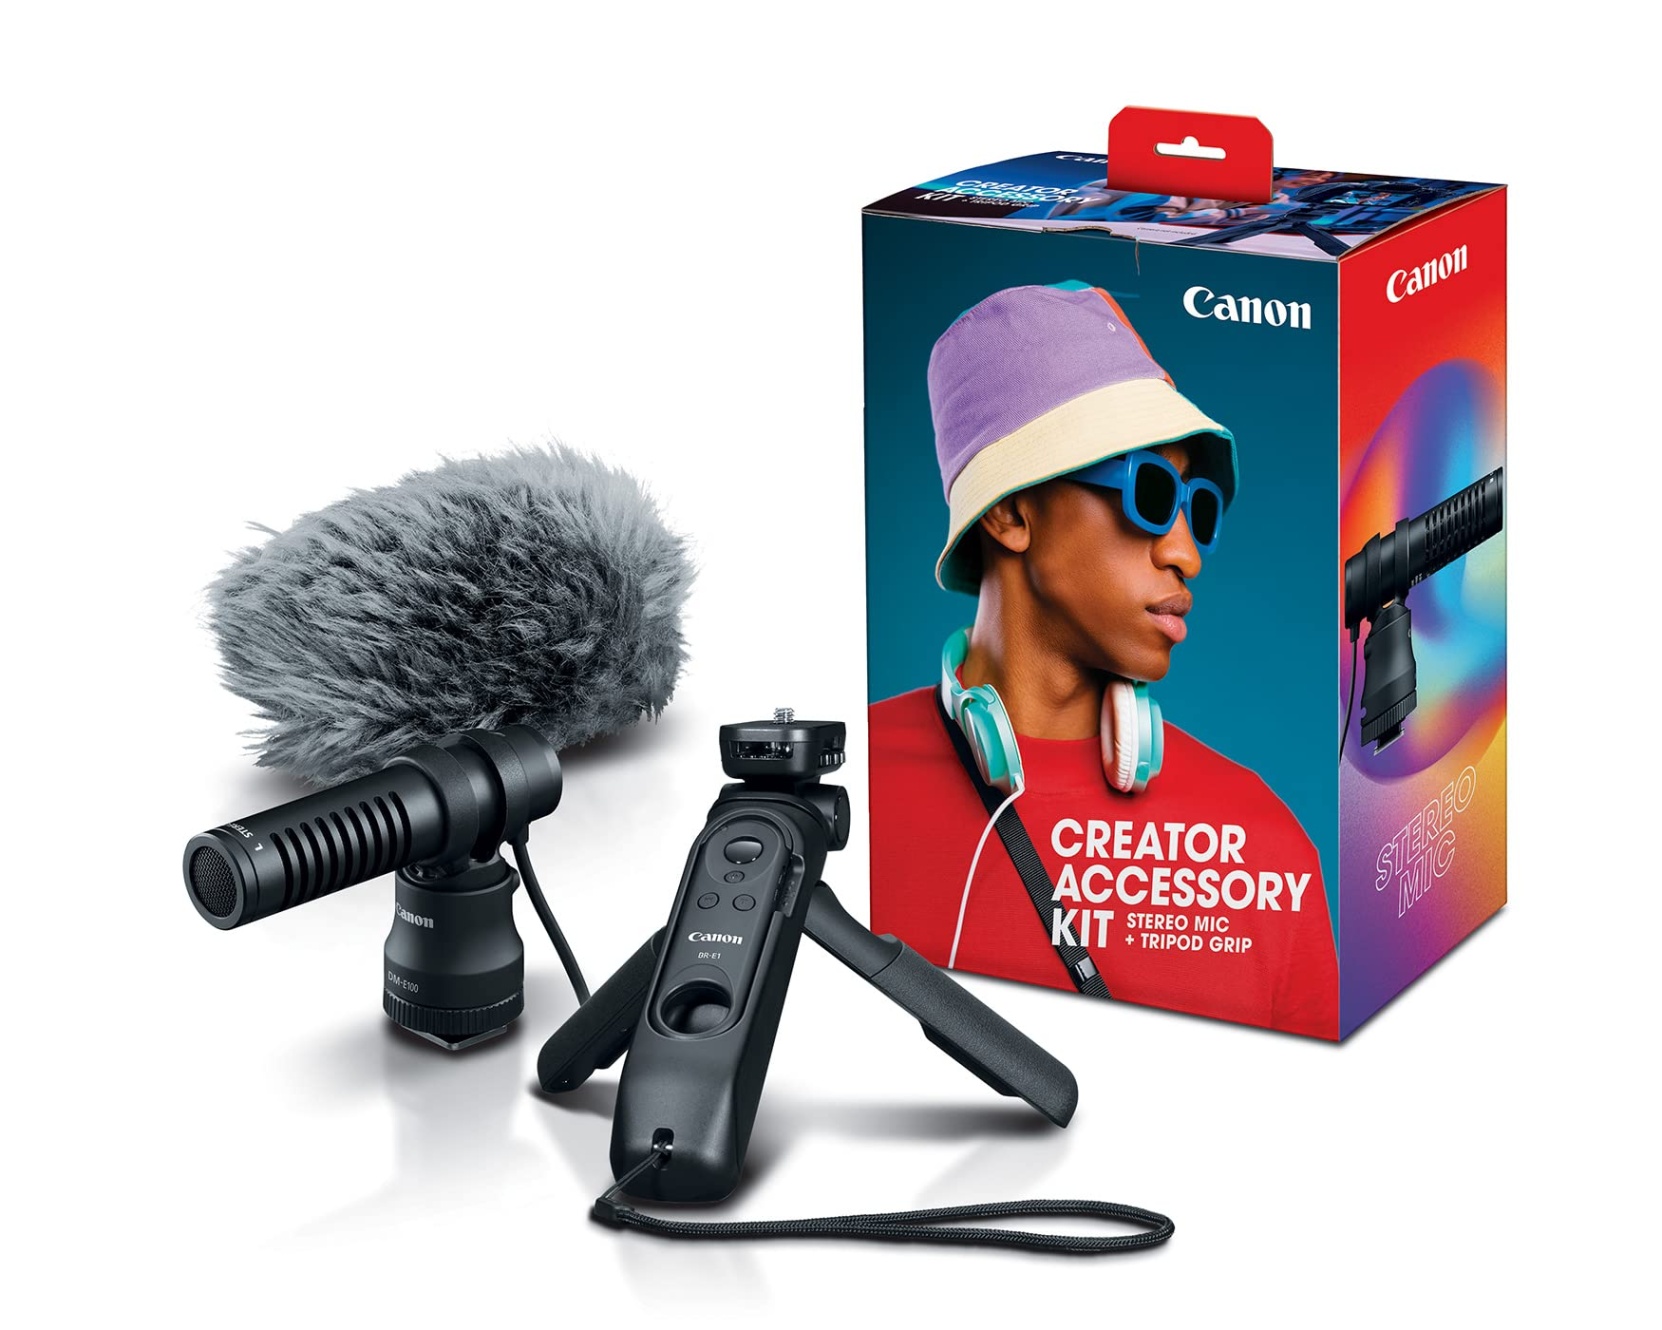 canon creator accessory kit Niche Utama Home Canon Creator Accessory Kit, Tripod Grip, Wireless Remote Control, Stereo  Microphone, Wind Screen, for Content Creation